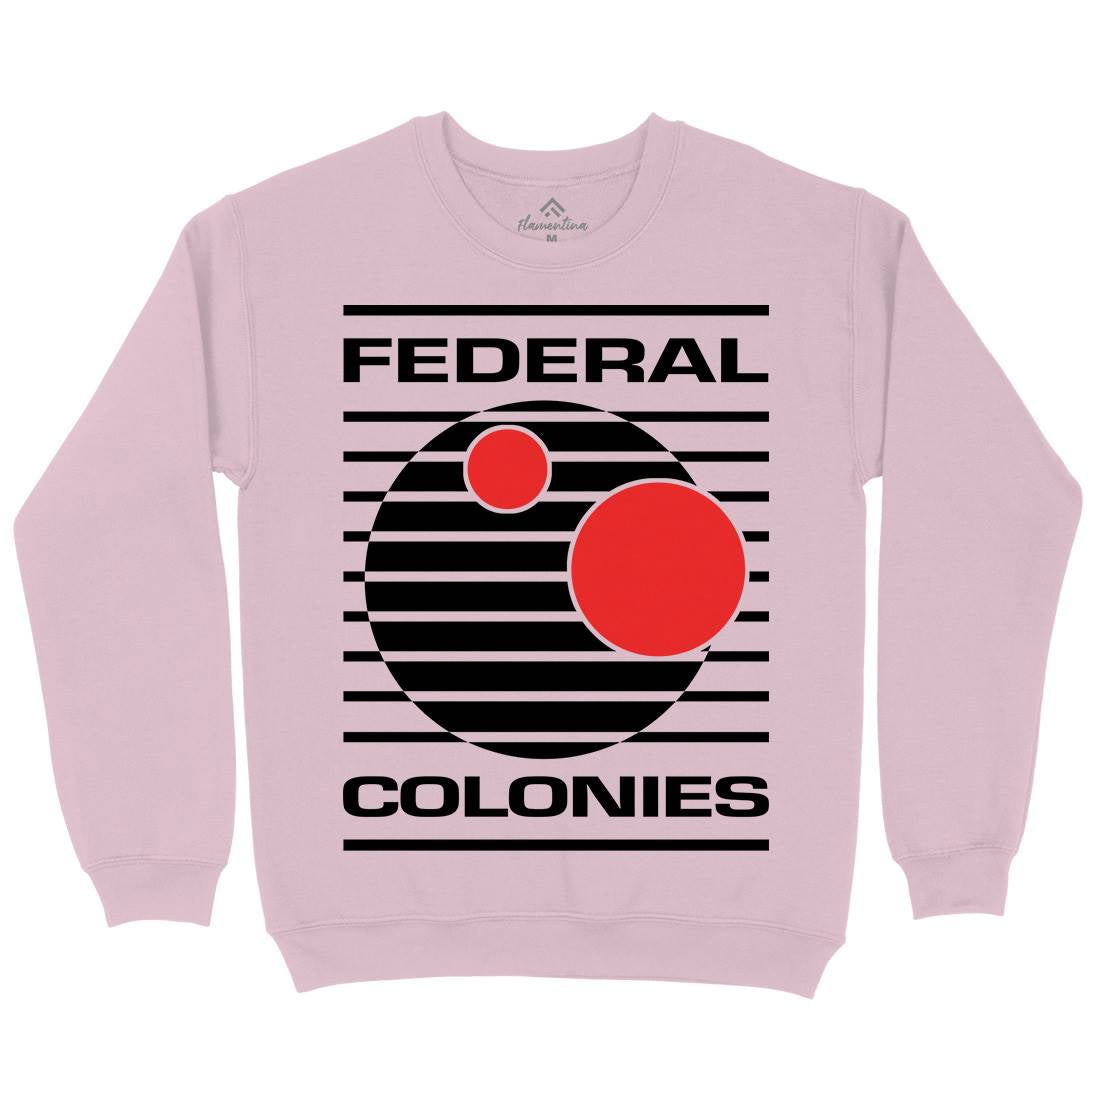 Federal Colonies Kids Crew Neck Sweatshirt Space D409